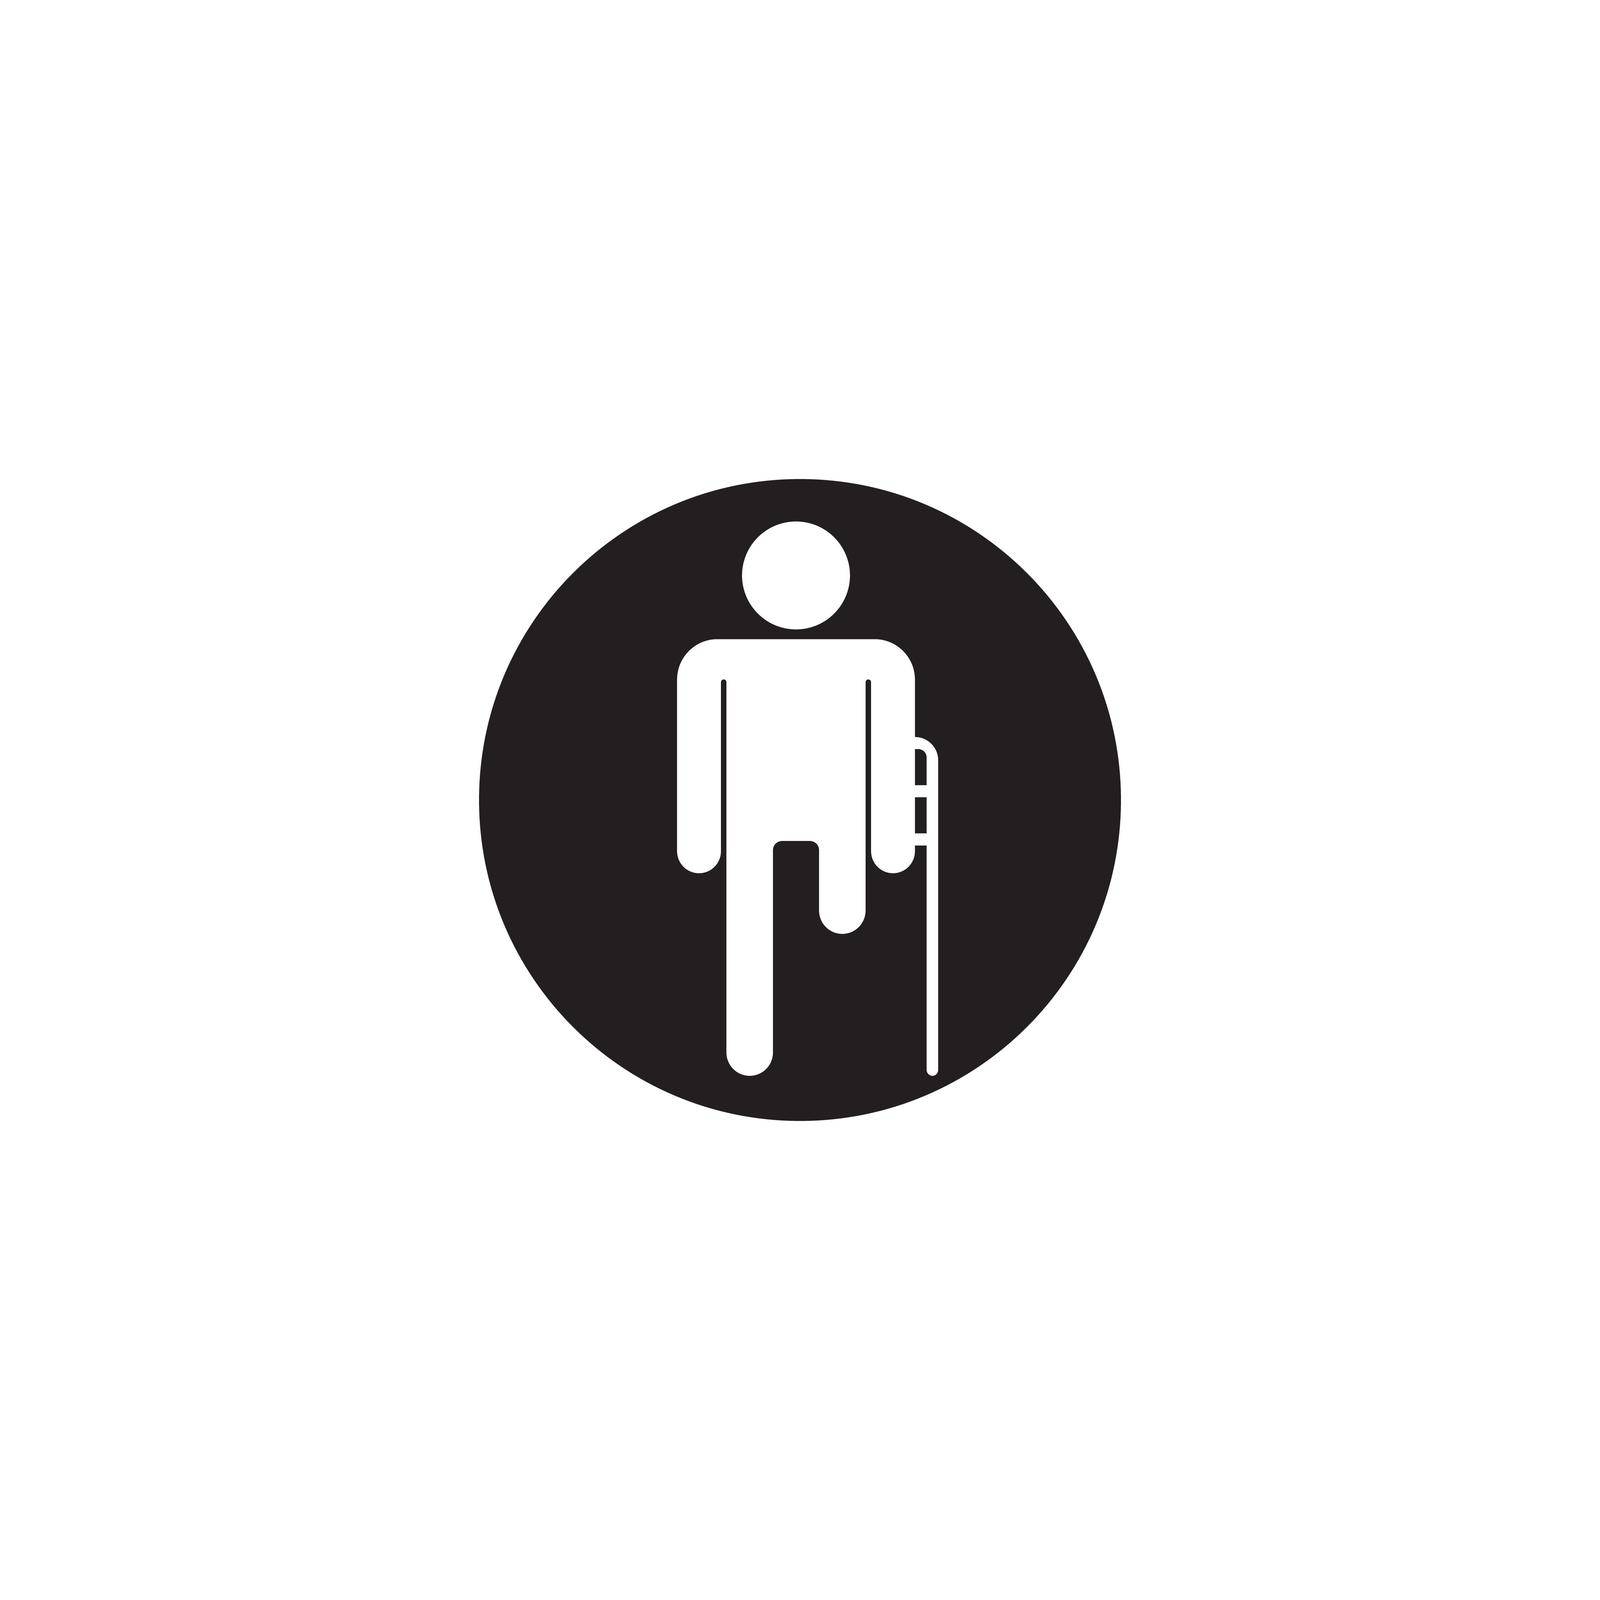 Human disabled icon logo vector icon template